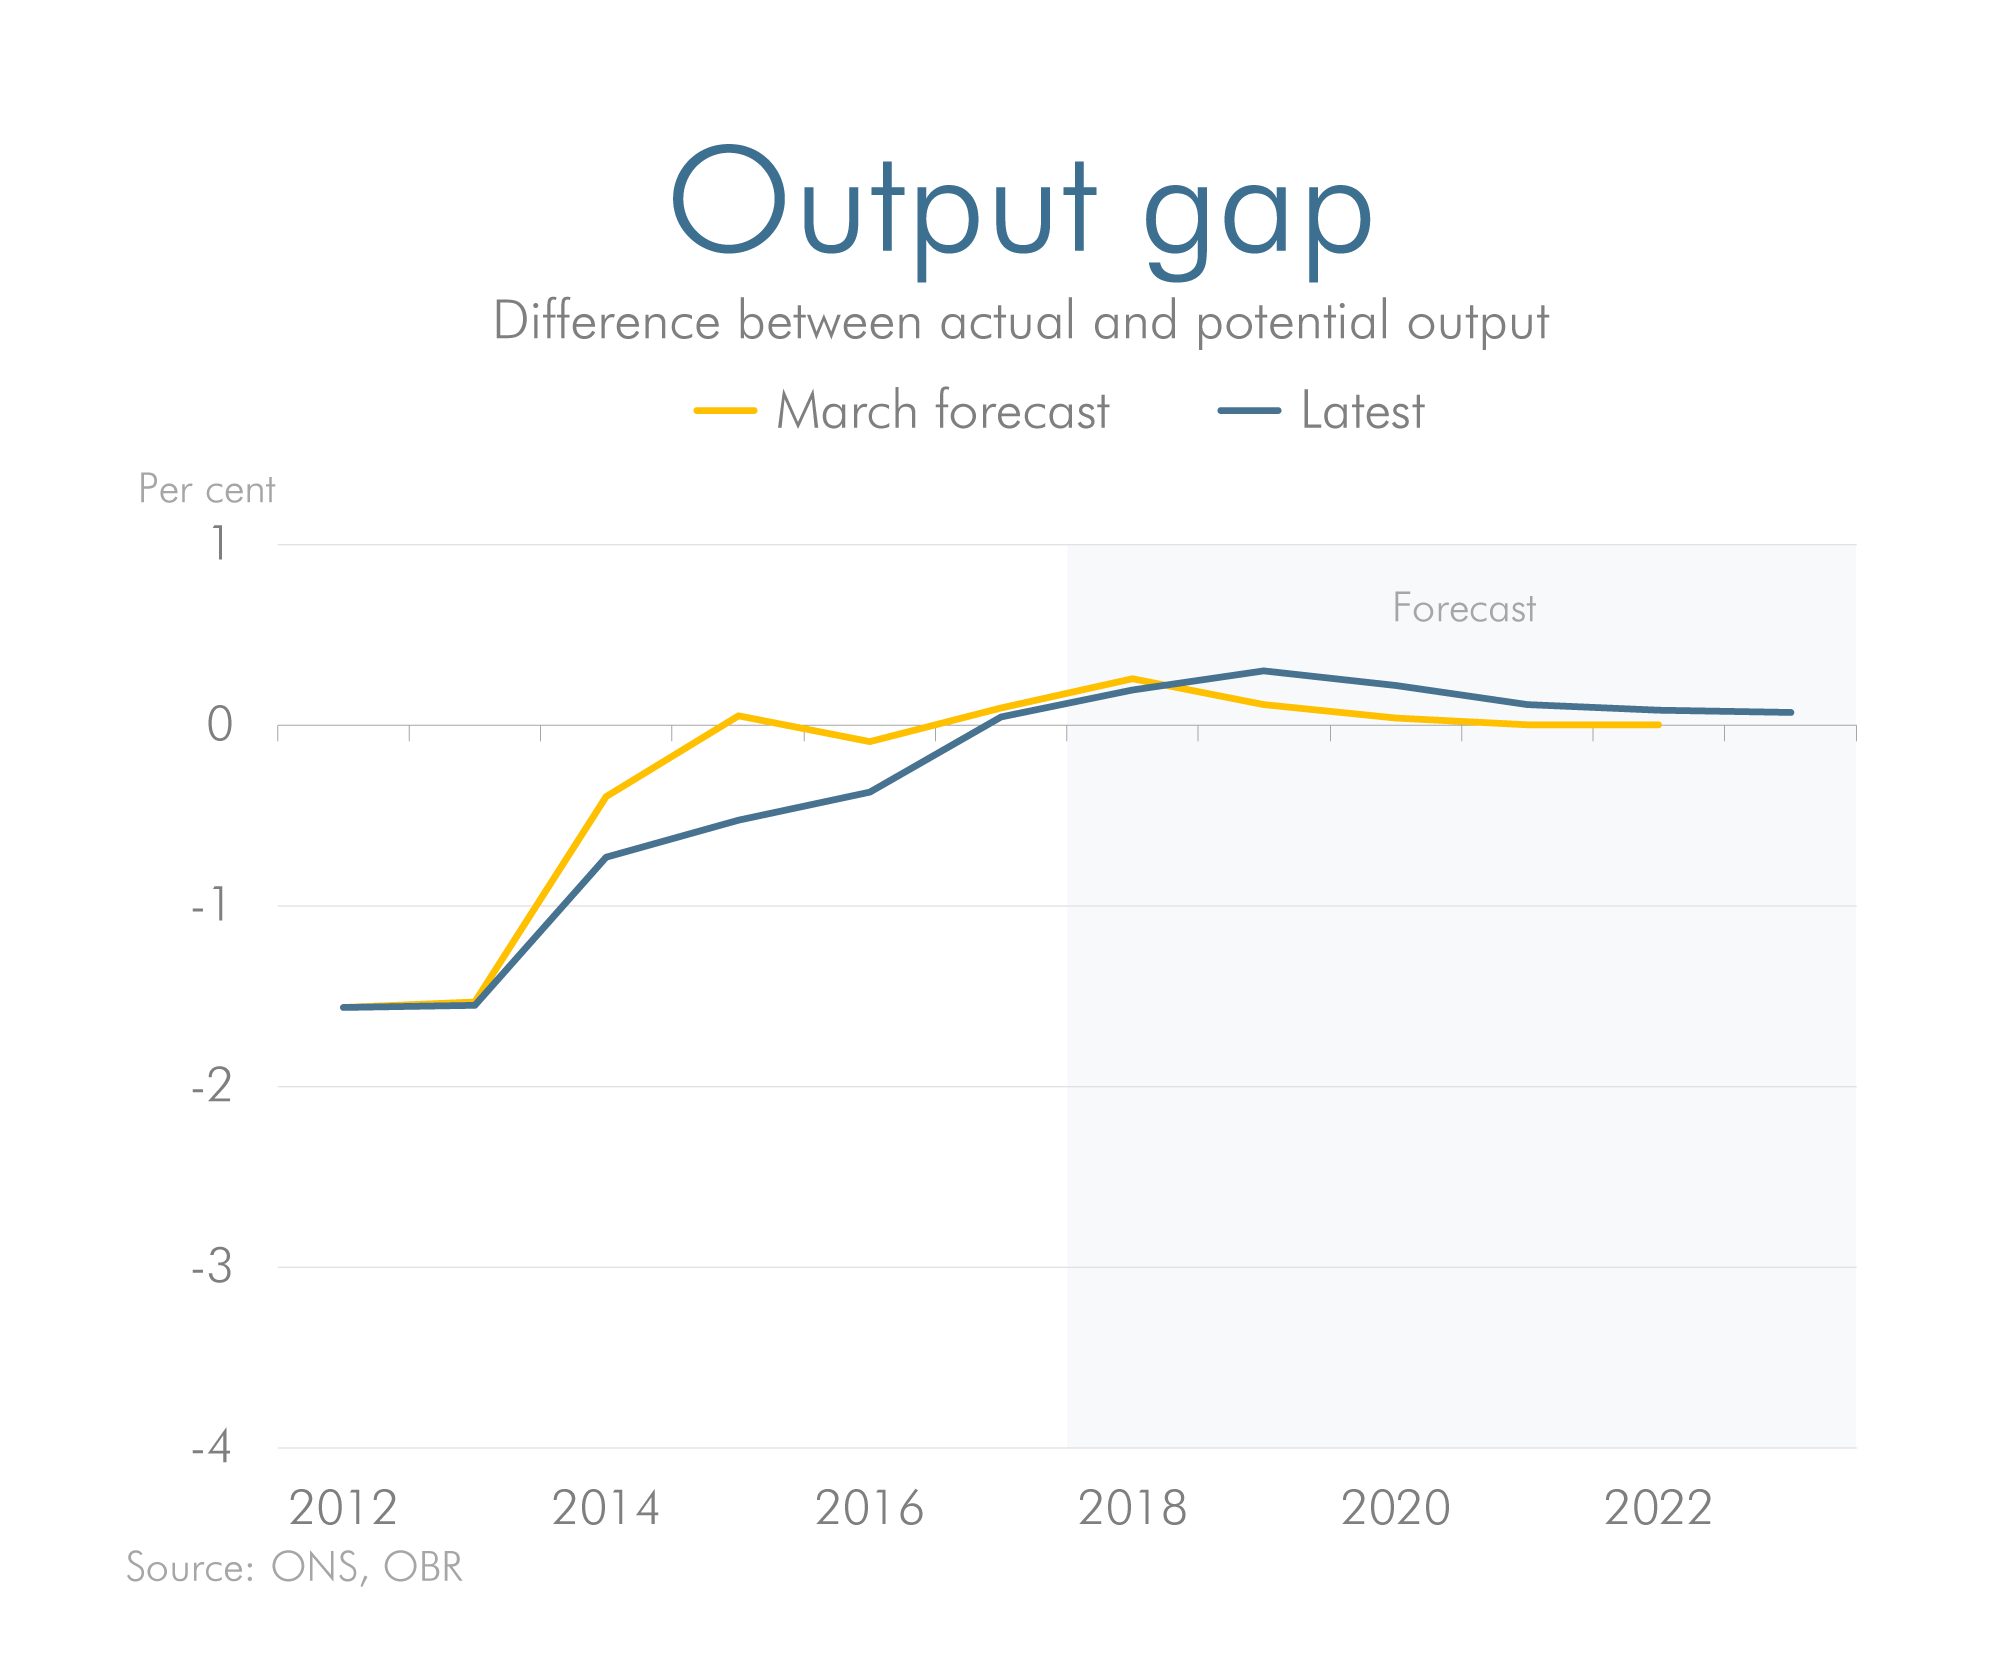 Output gap previous vs latest forecast